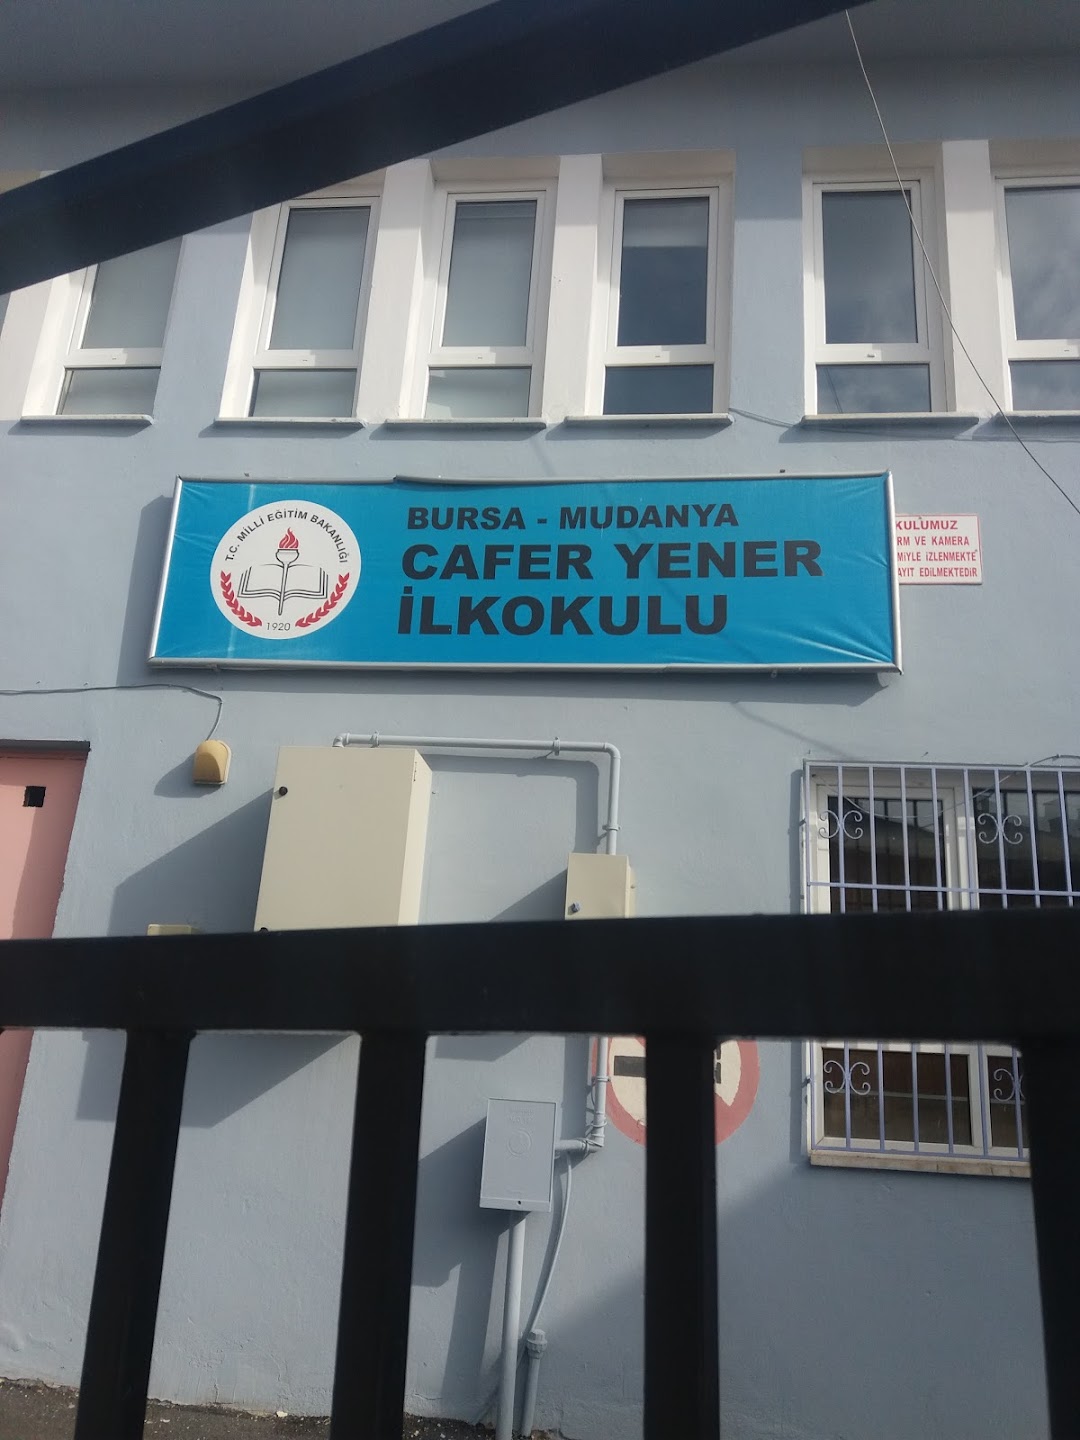 Cafer Yener lkokulu